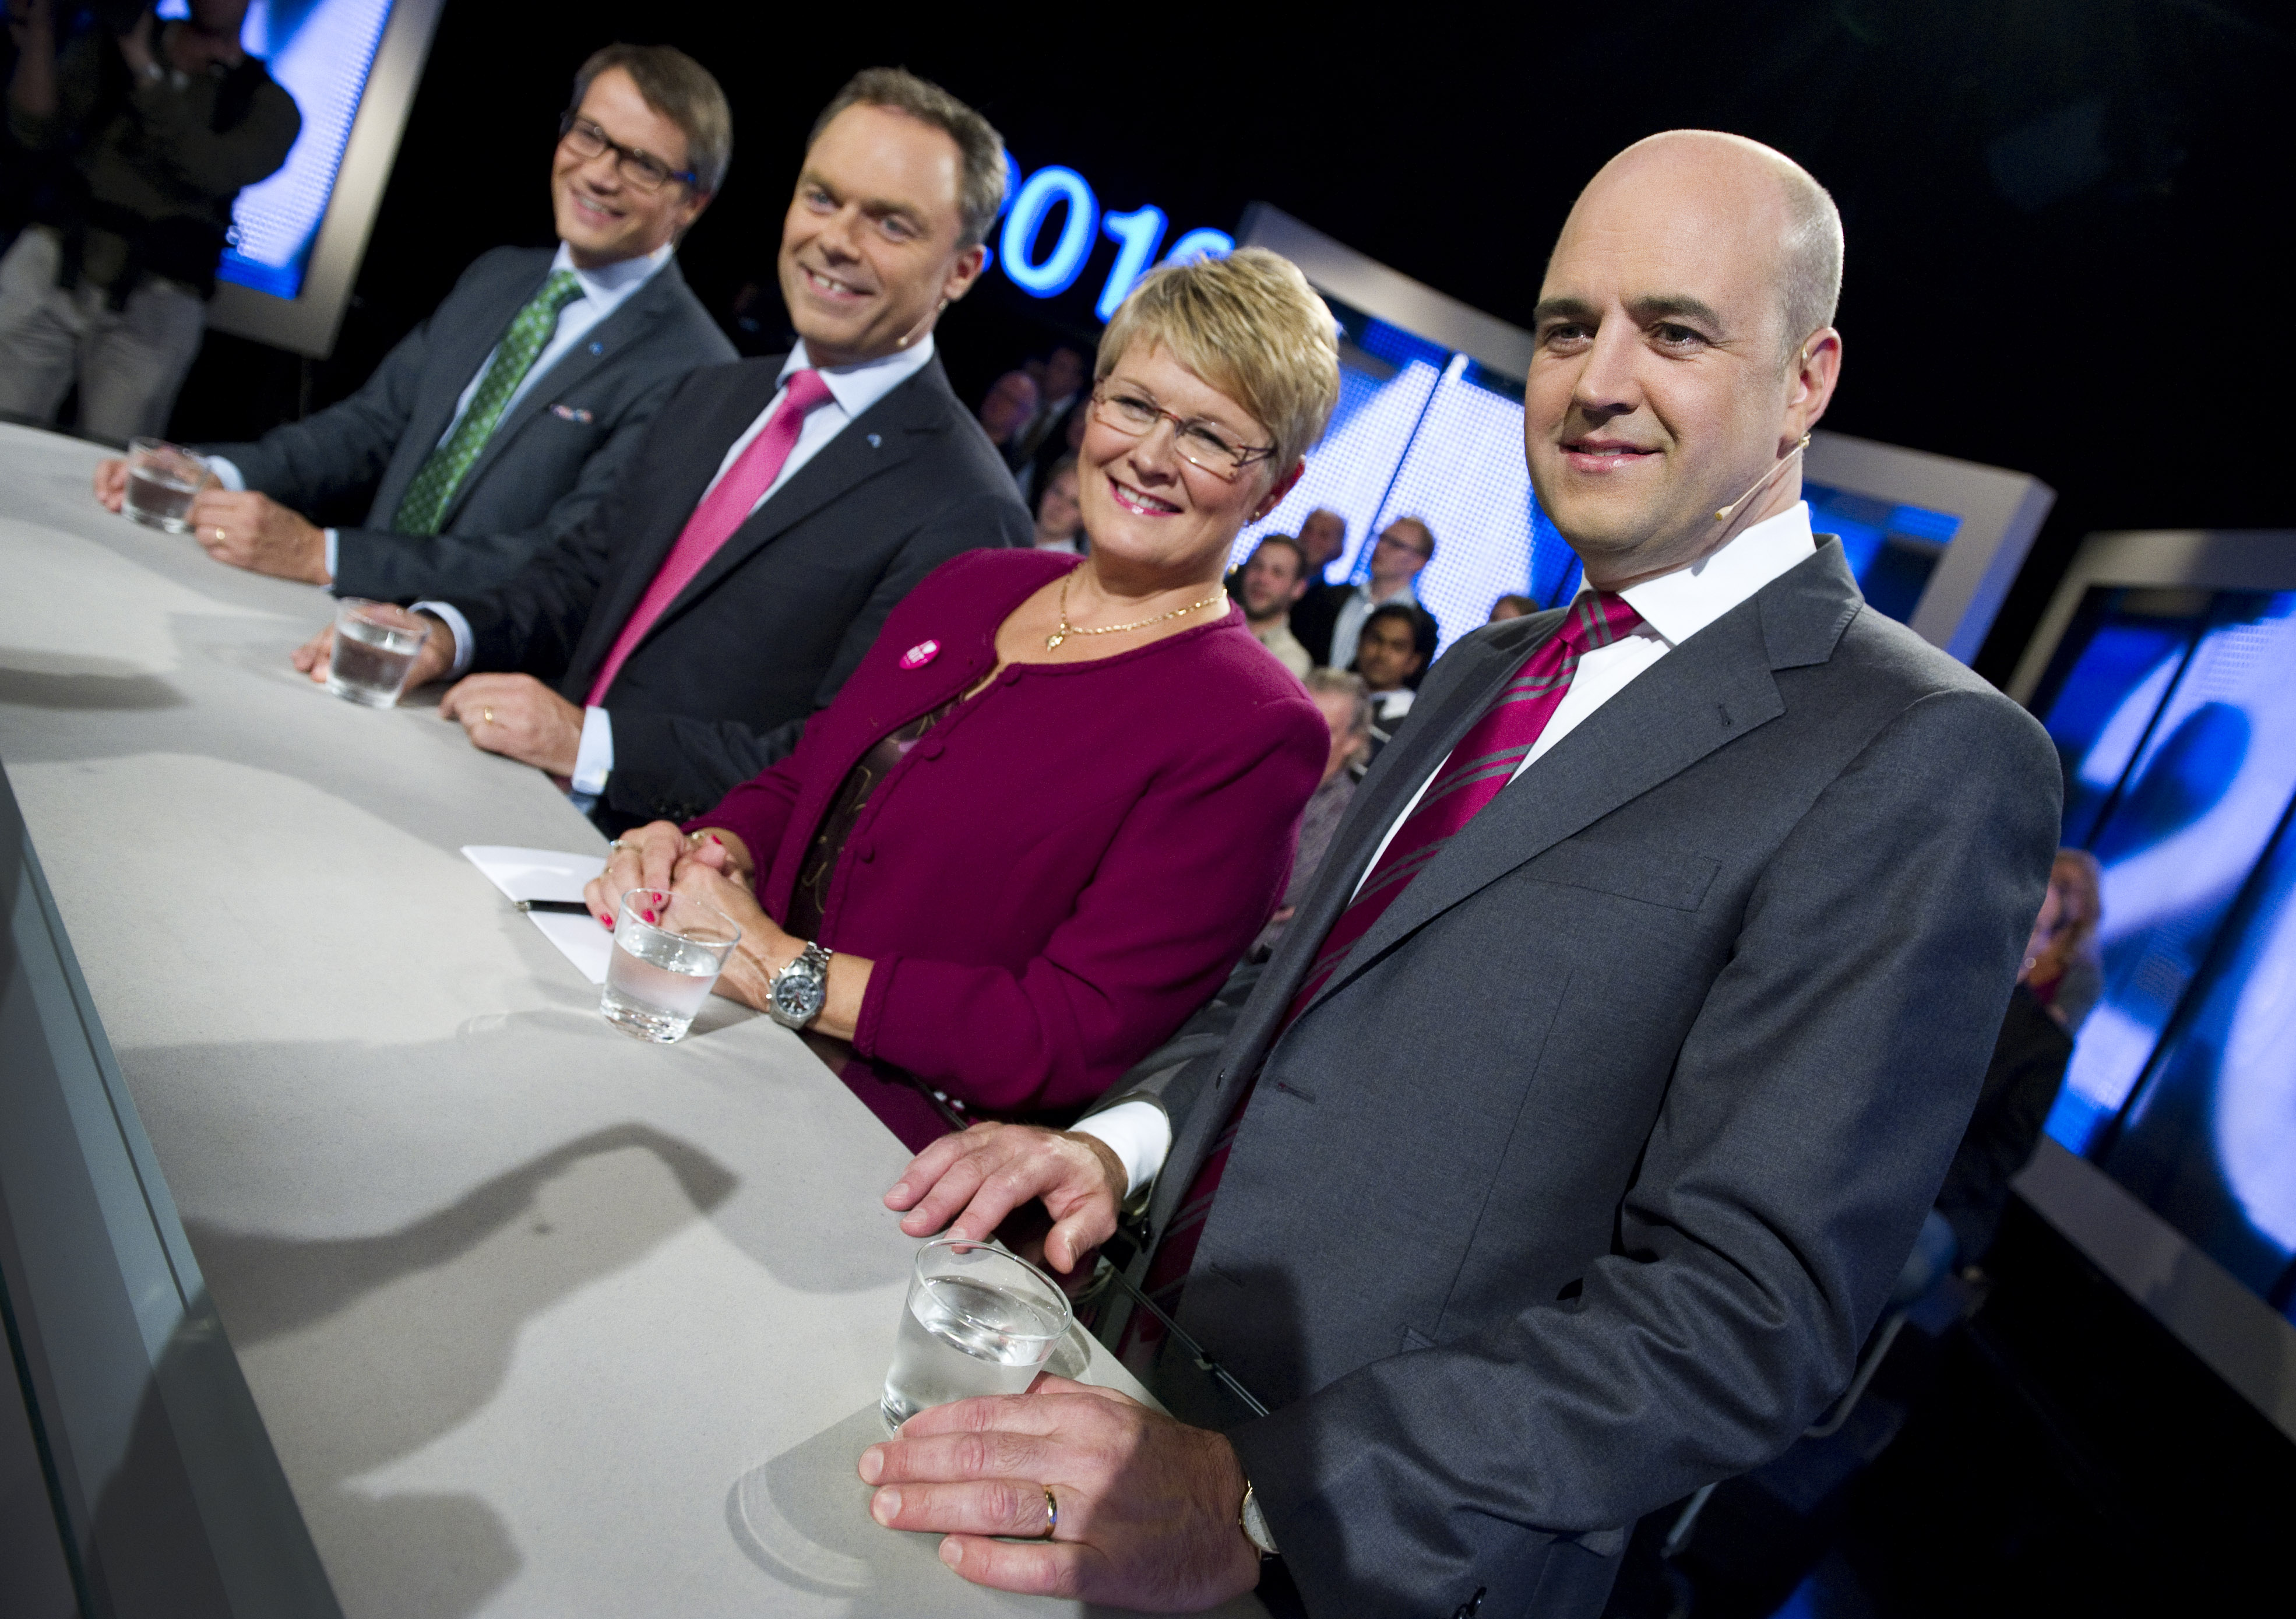 Alliansen, Jenny Östergren, Riksdagsvalet 2010, TV4, Malou von Sivers, Fredrik Reinfeldt, Partiledarutfrågning, Jan Björklund